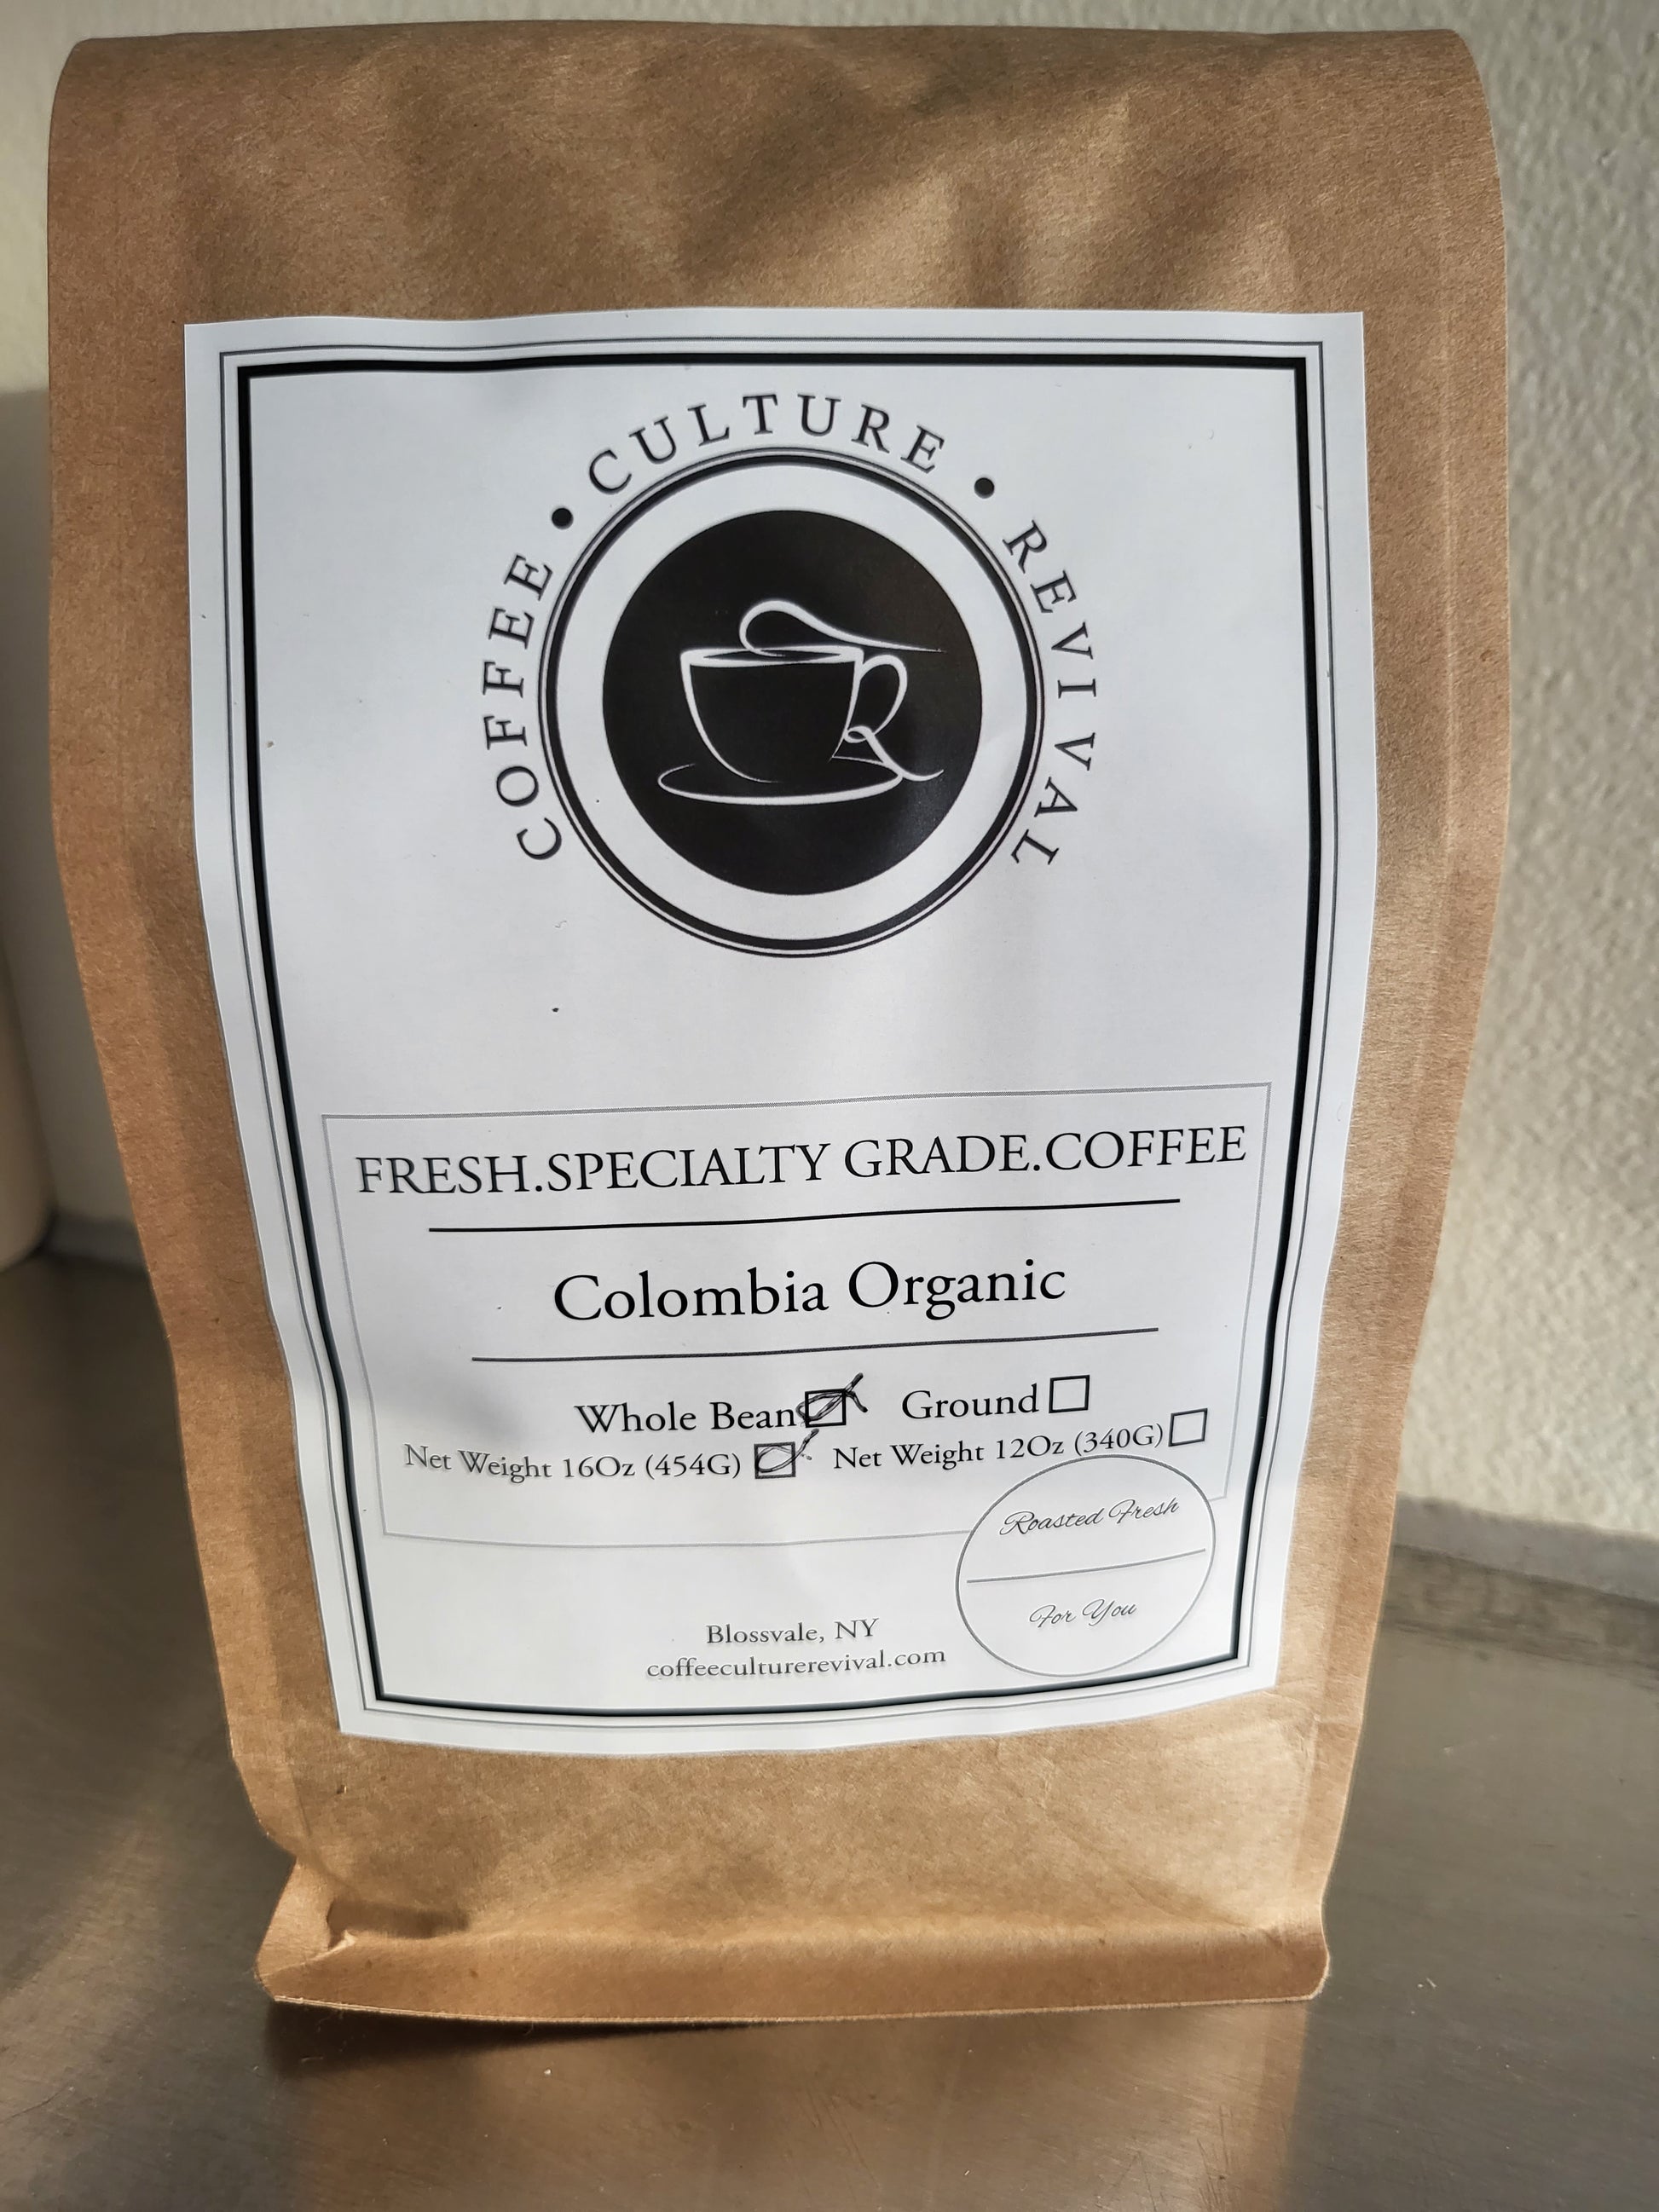 Fresh roasted fair trade organic coffee